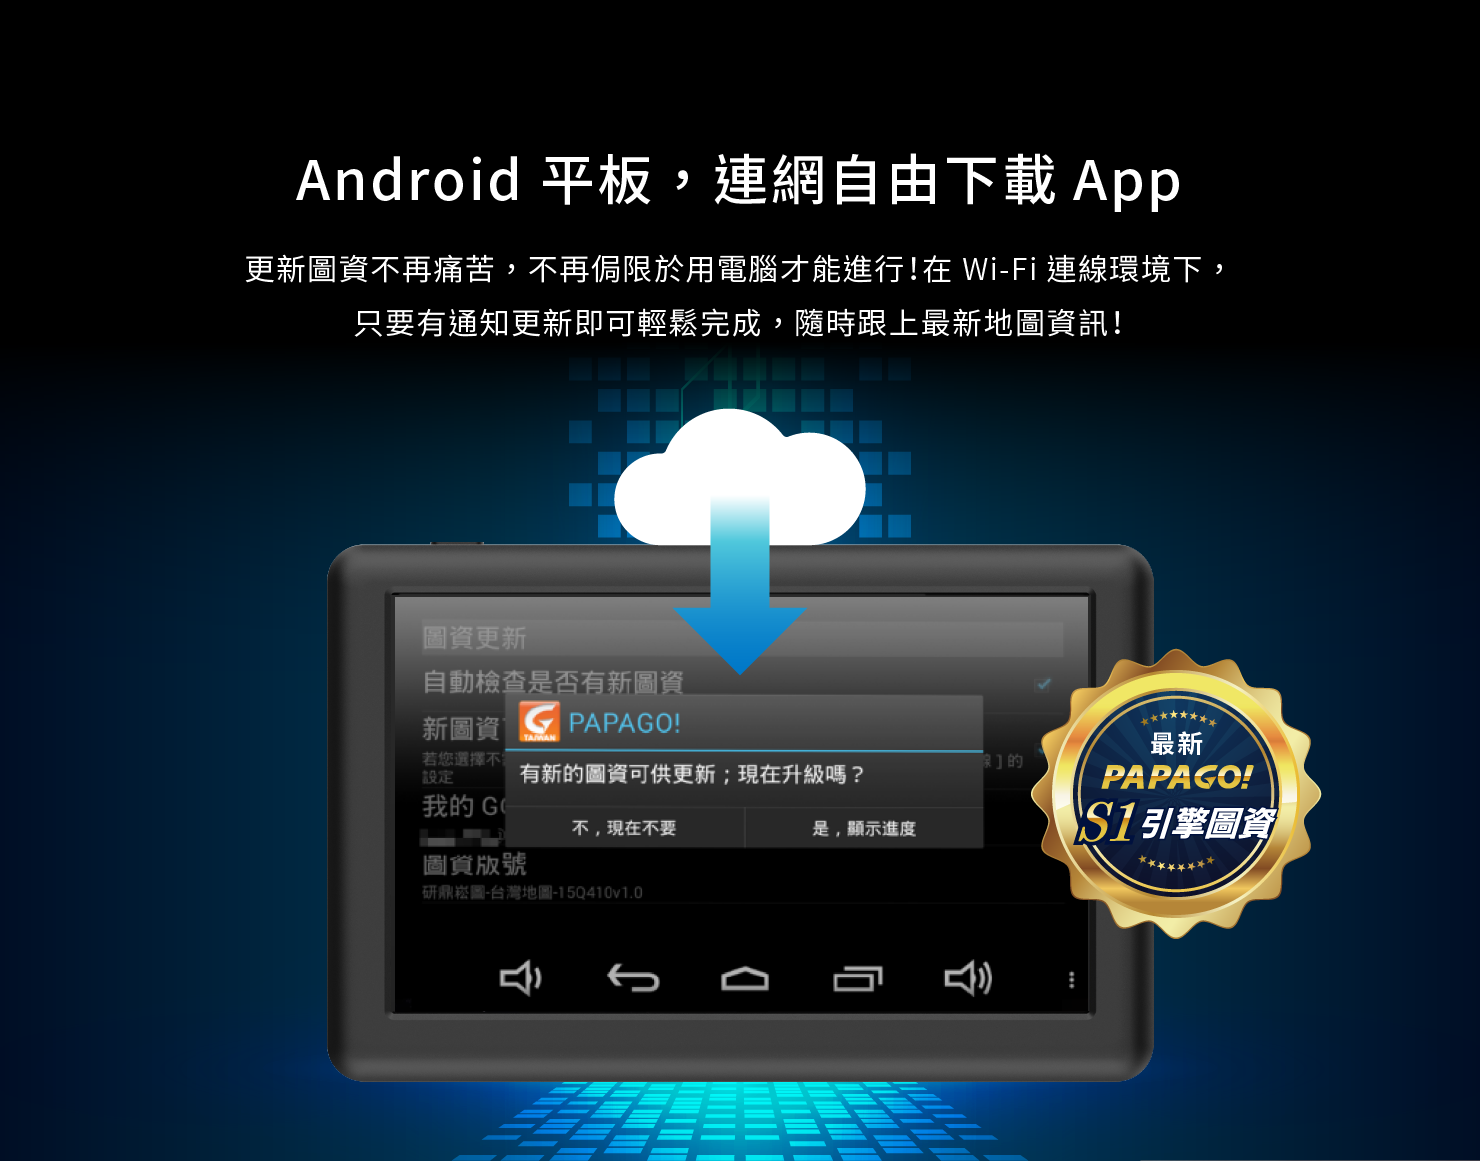 Android平板，連網自由下載App